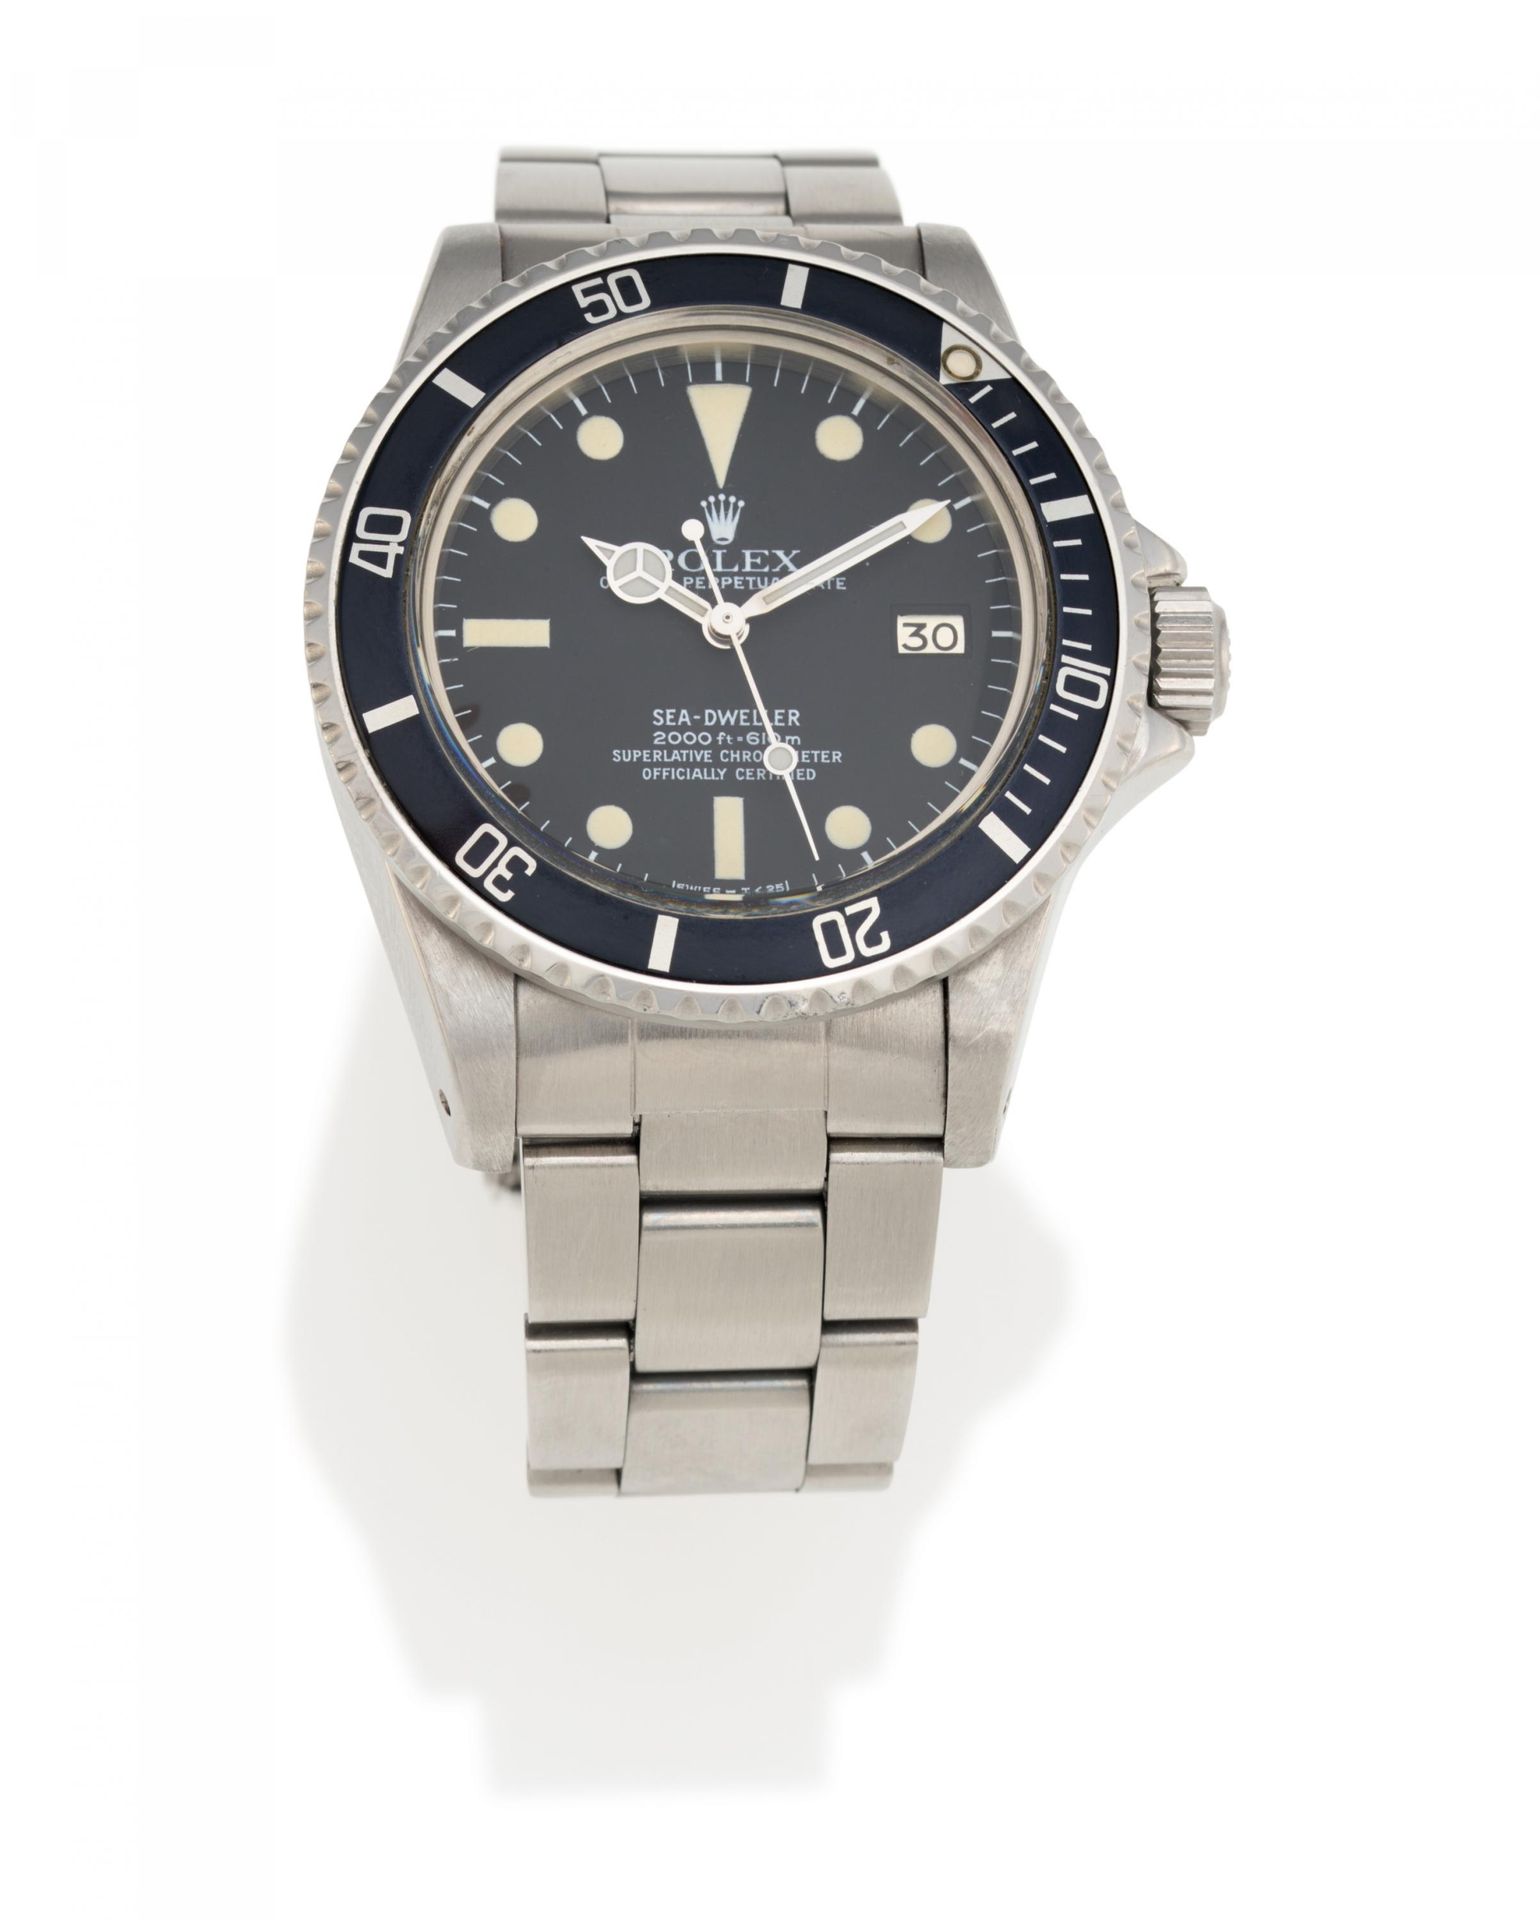 ROLEX ROLEX
Sea-Dweller。手表。

原产地。 瑞士，日内瓦。
日期： 1978年。
发条。自 动，cal.1570。
外壳/腕带。 精钢，&hellip;